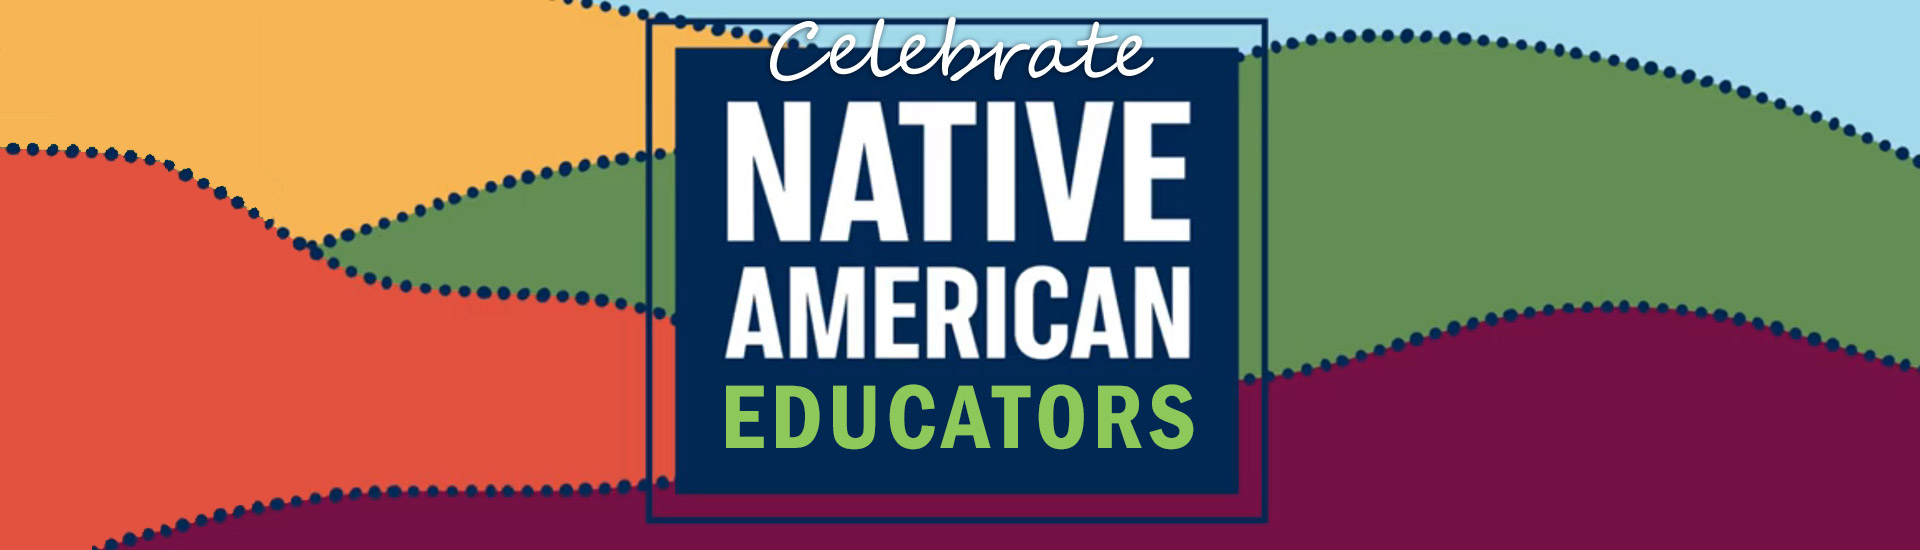 Celebrate Native American Educators